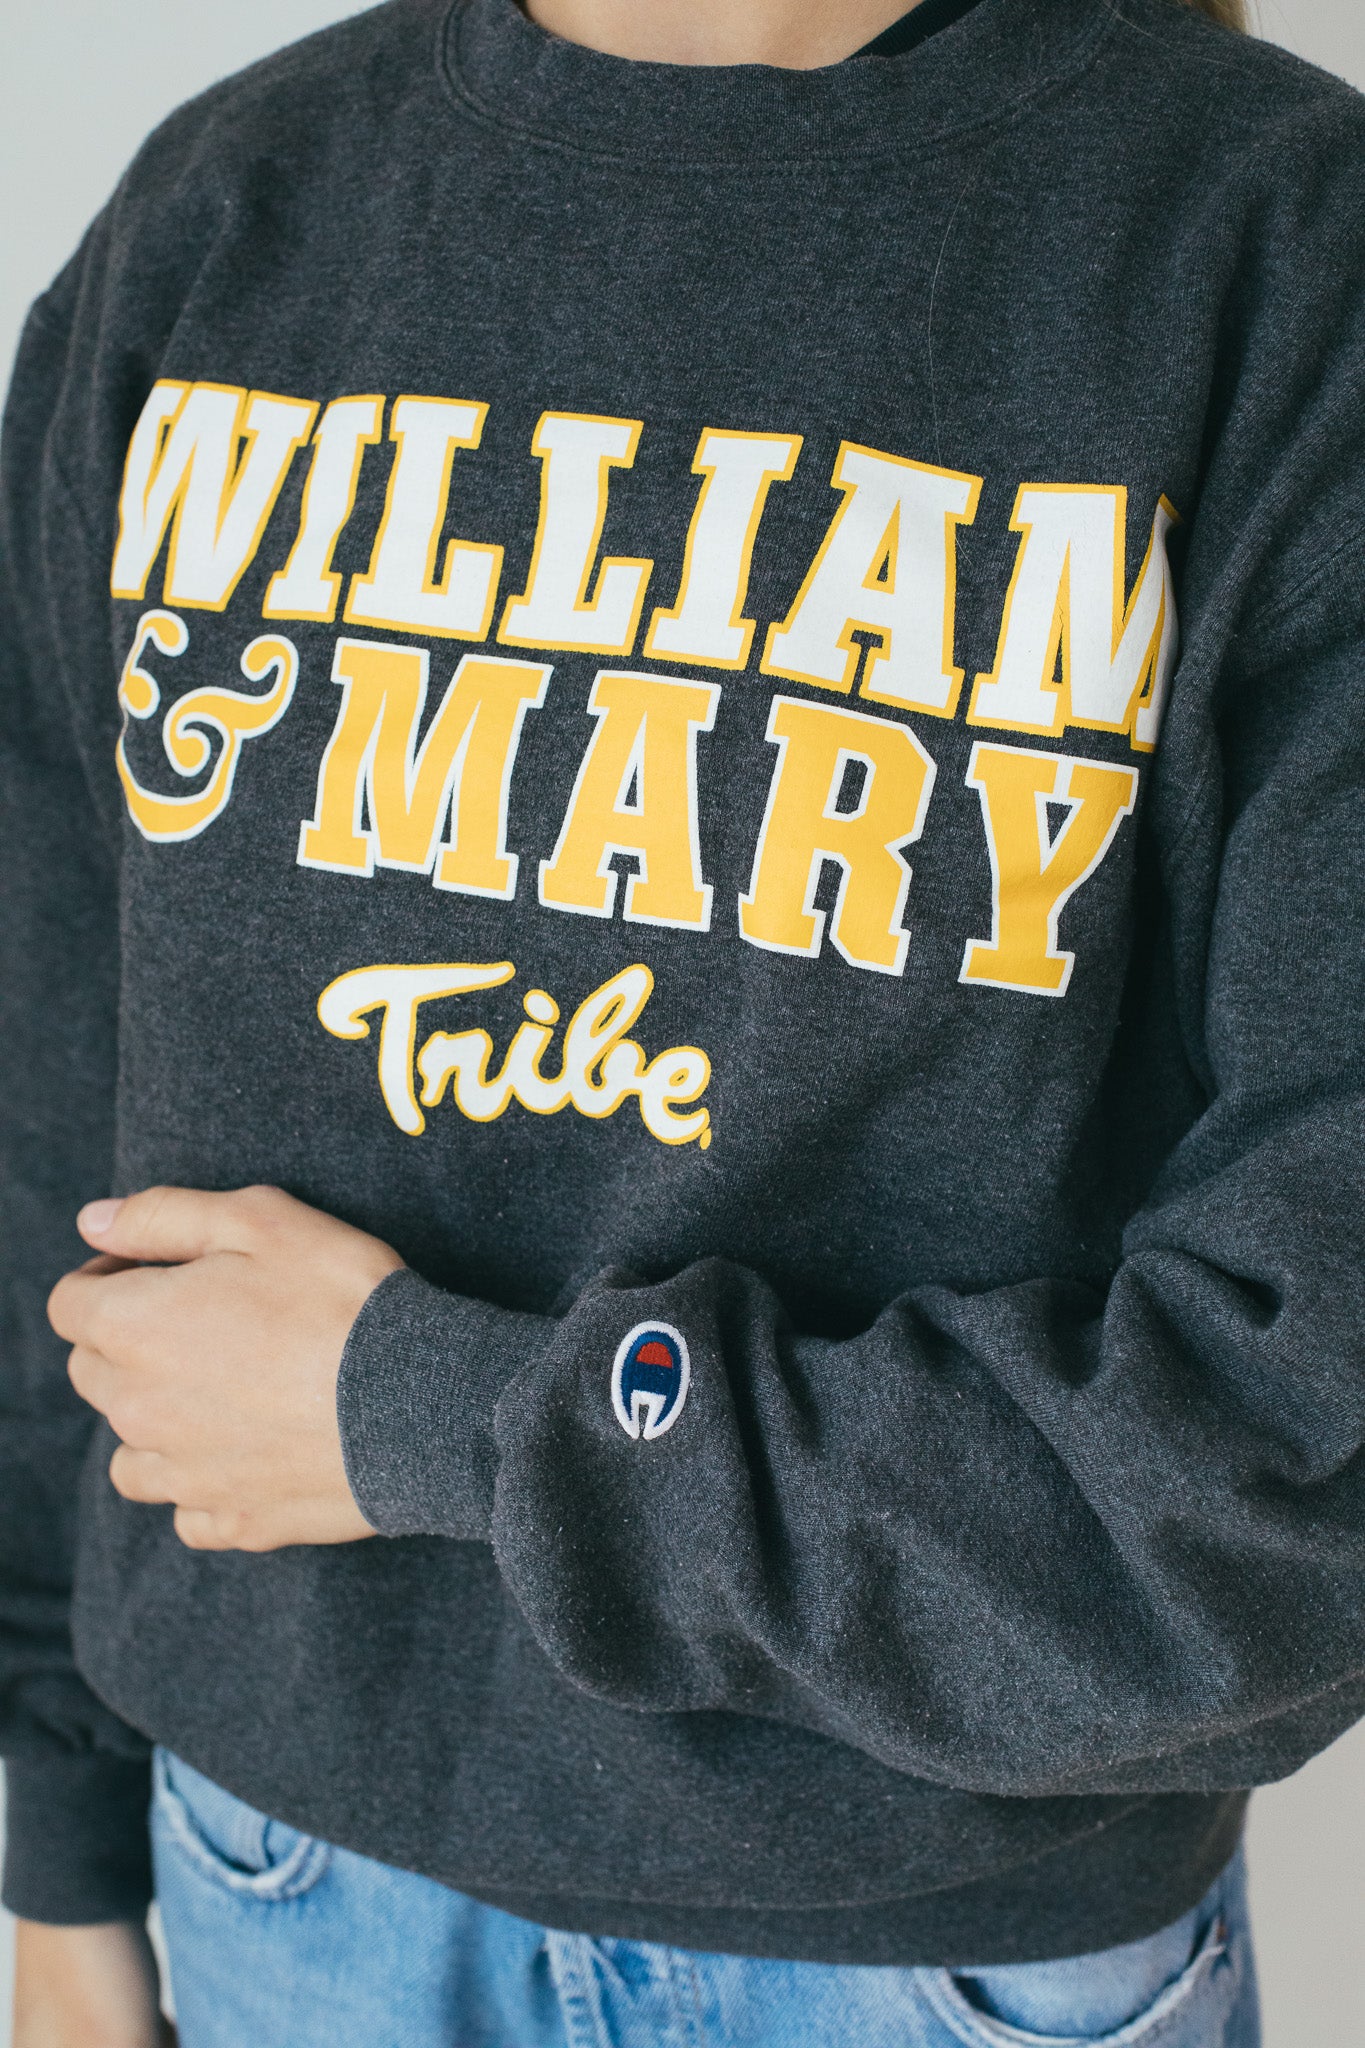 William Mary Tribe - Sweatshirt